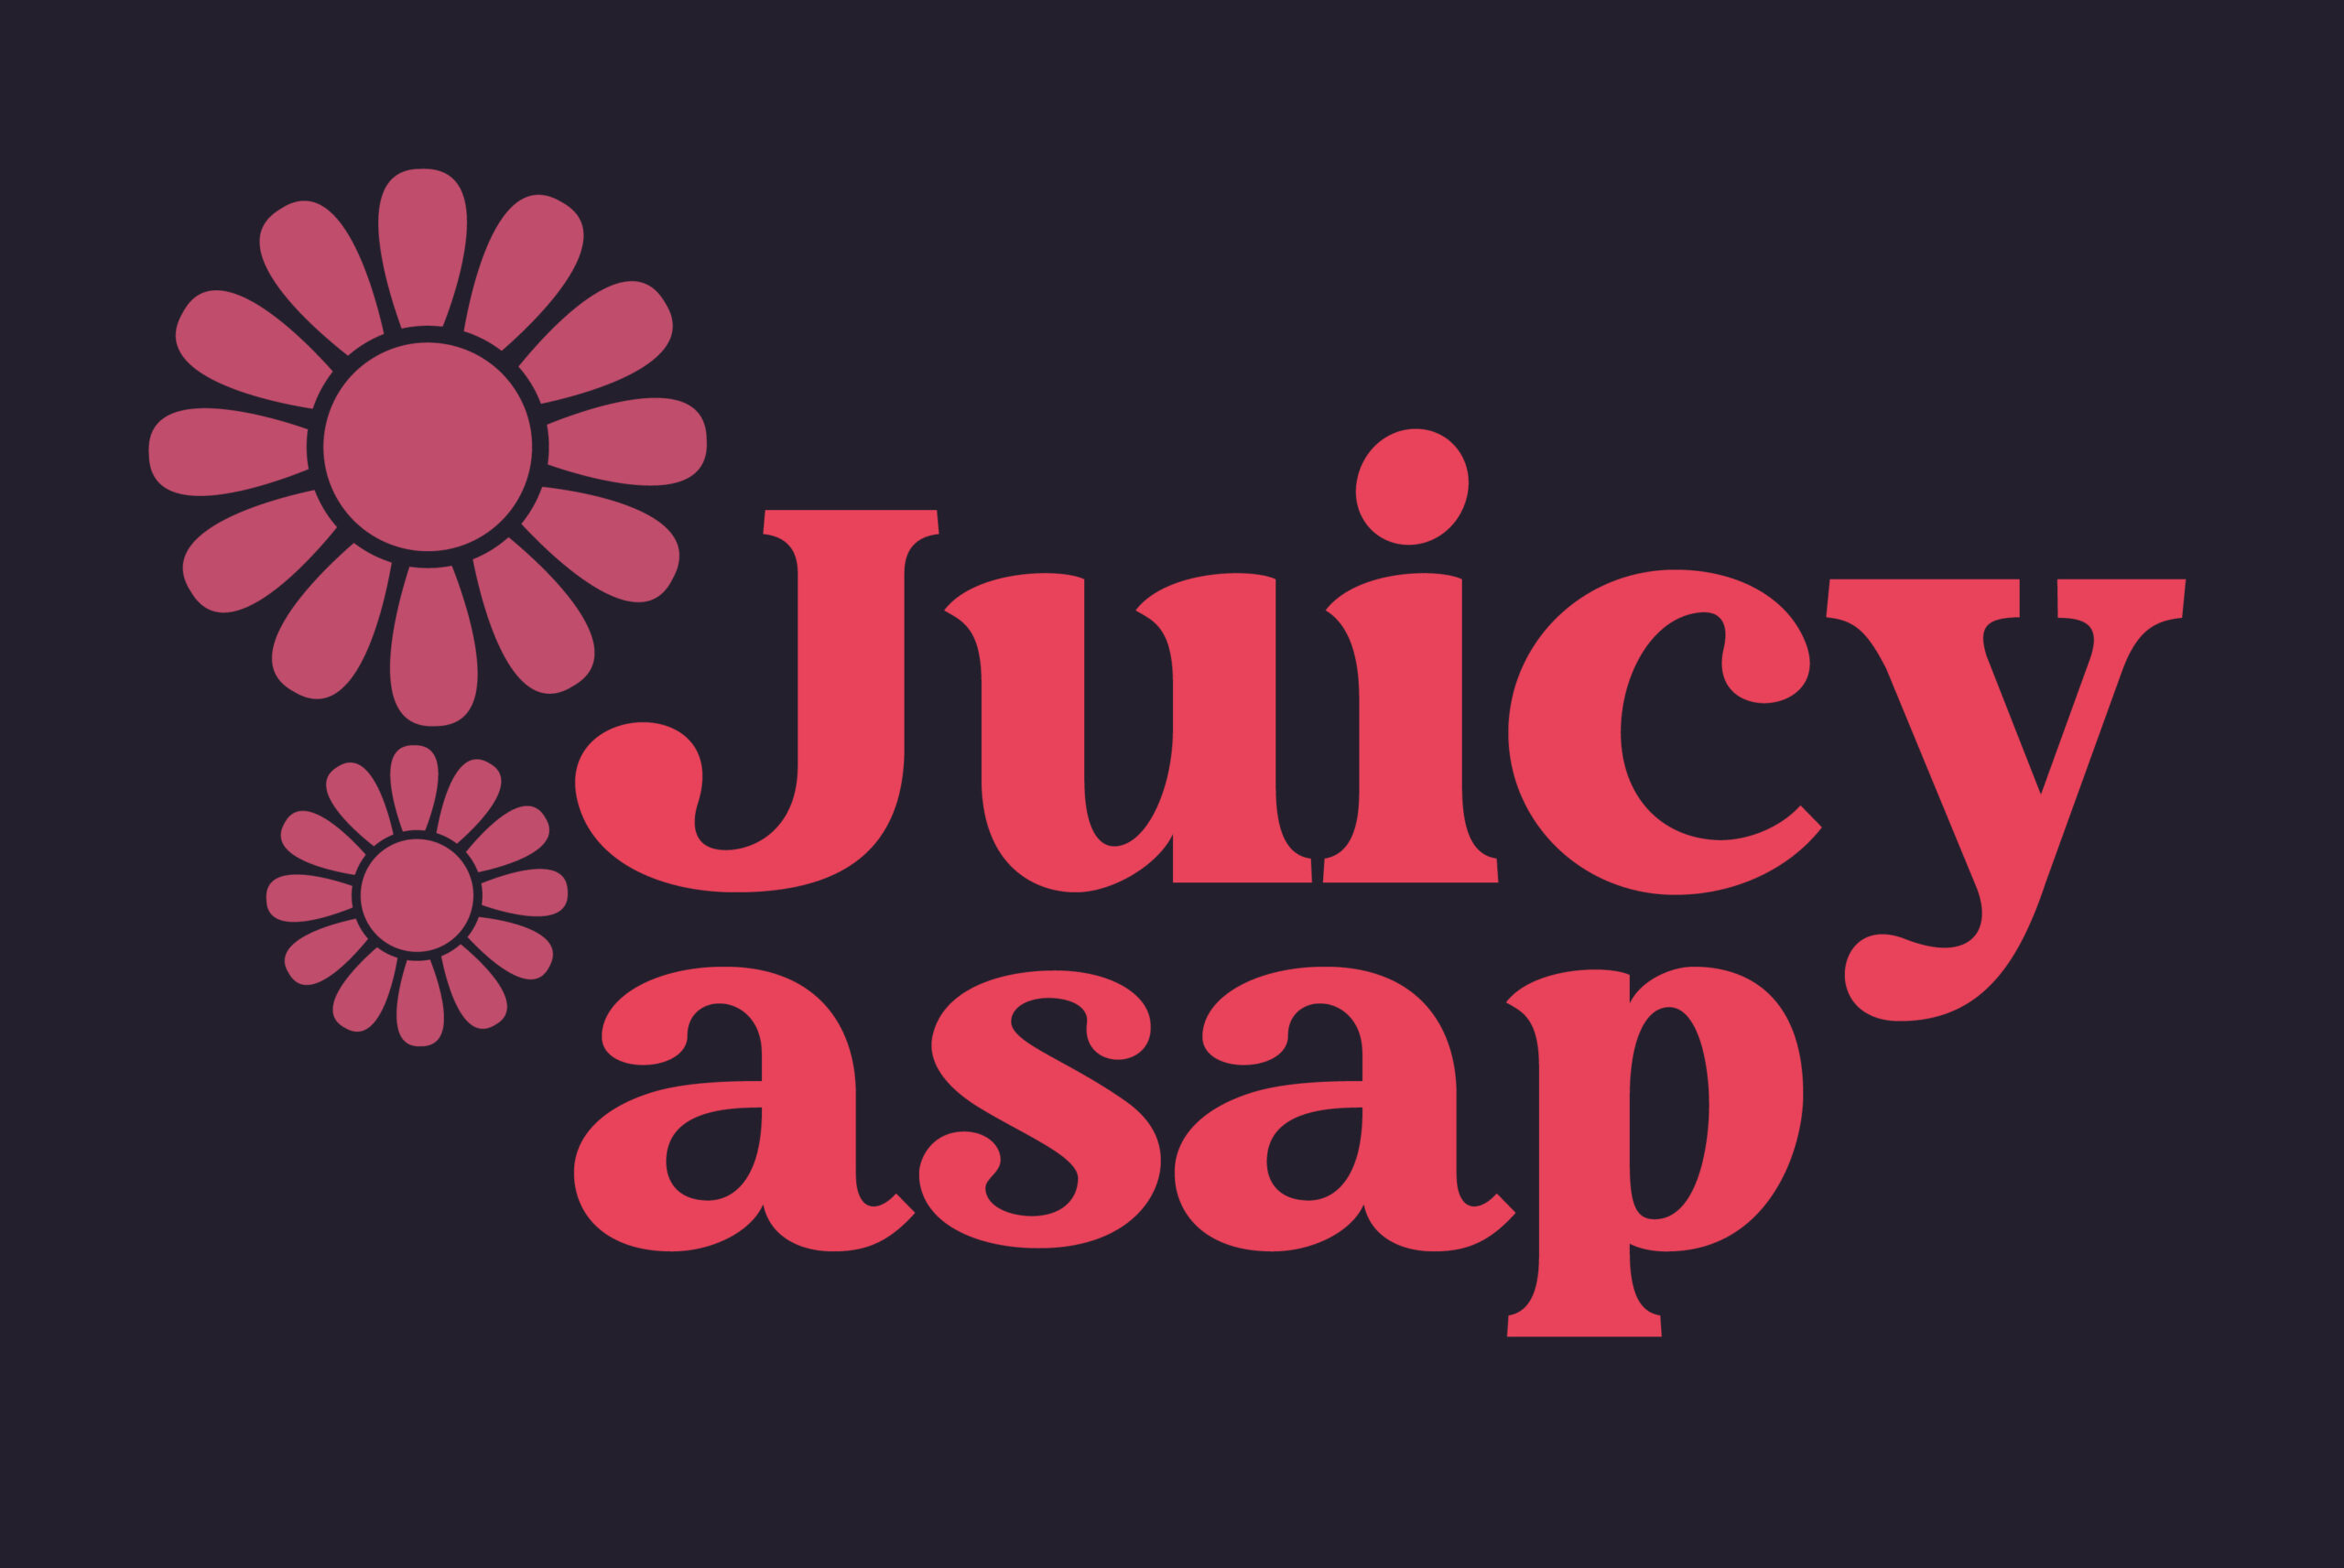 Juicy Asap